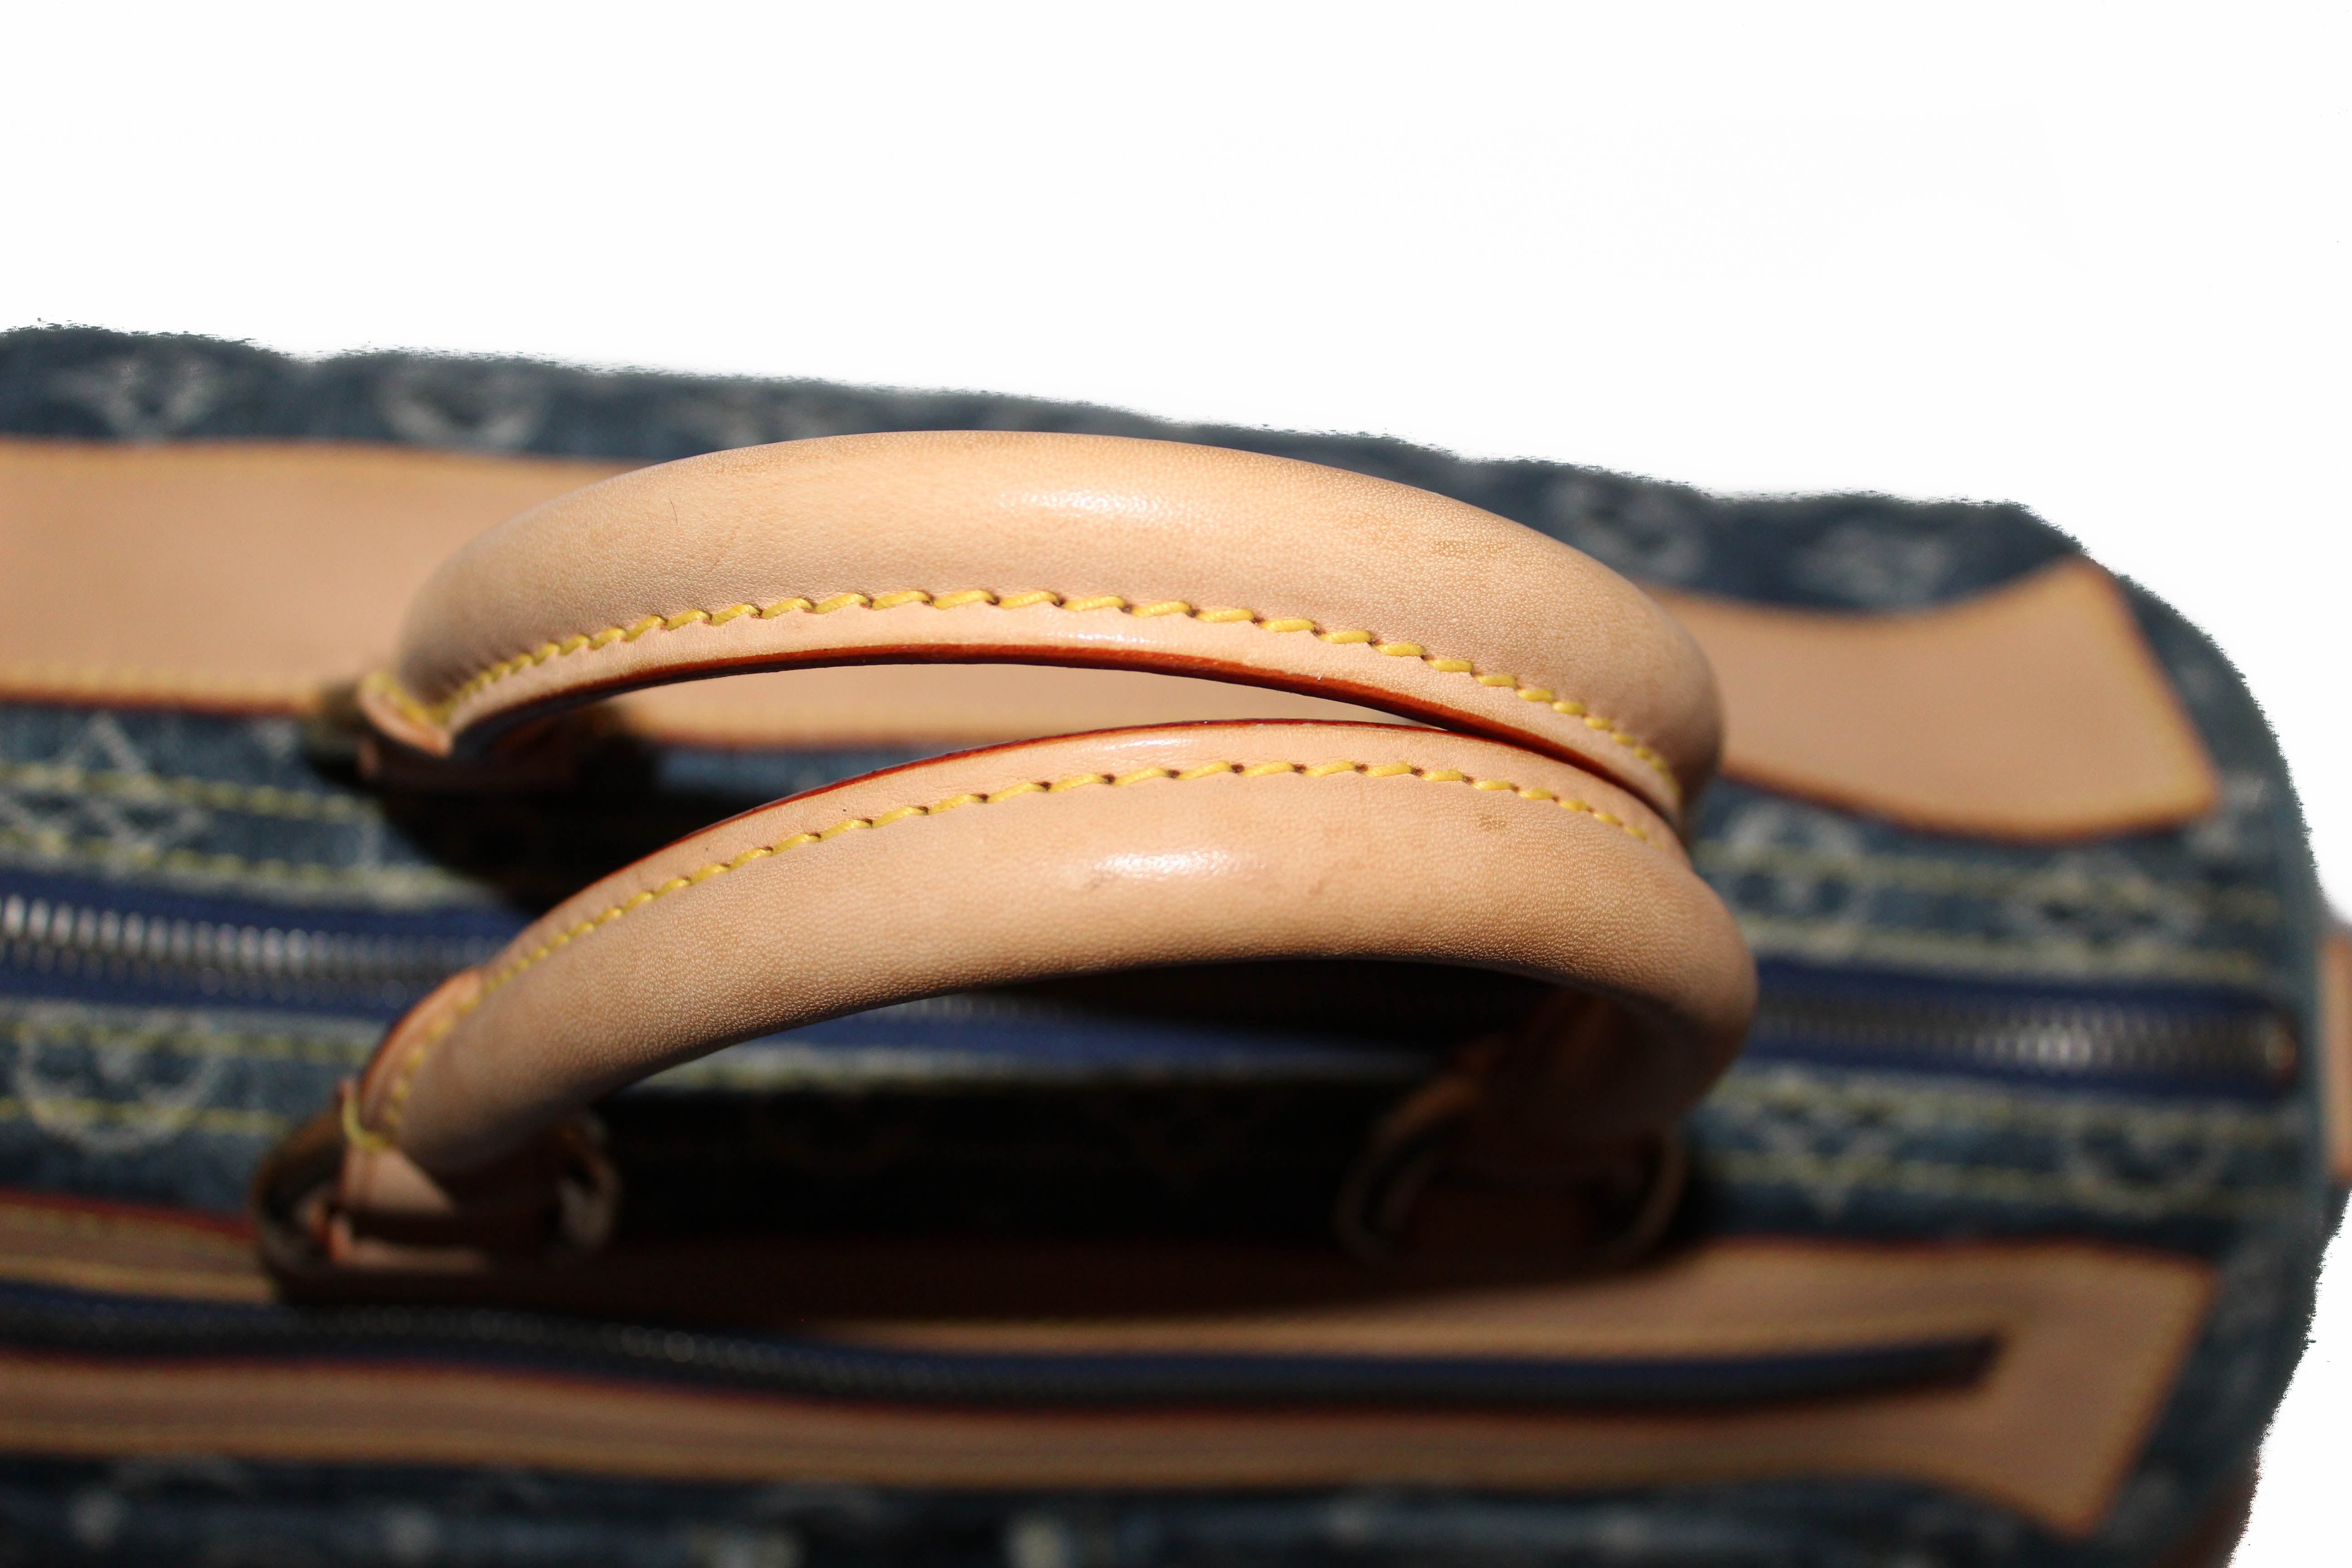 Authentic Louis Vuitton Blue Denim Neo Speedy Handbag